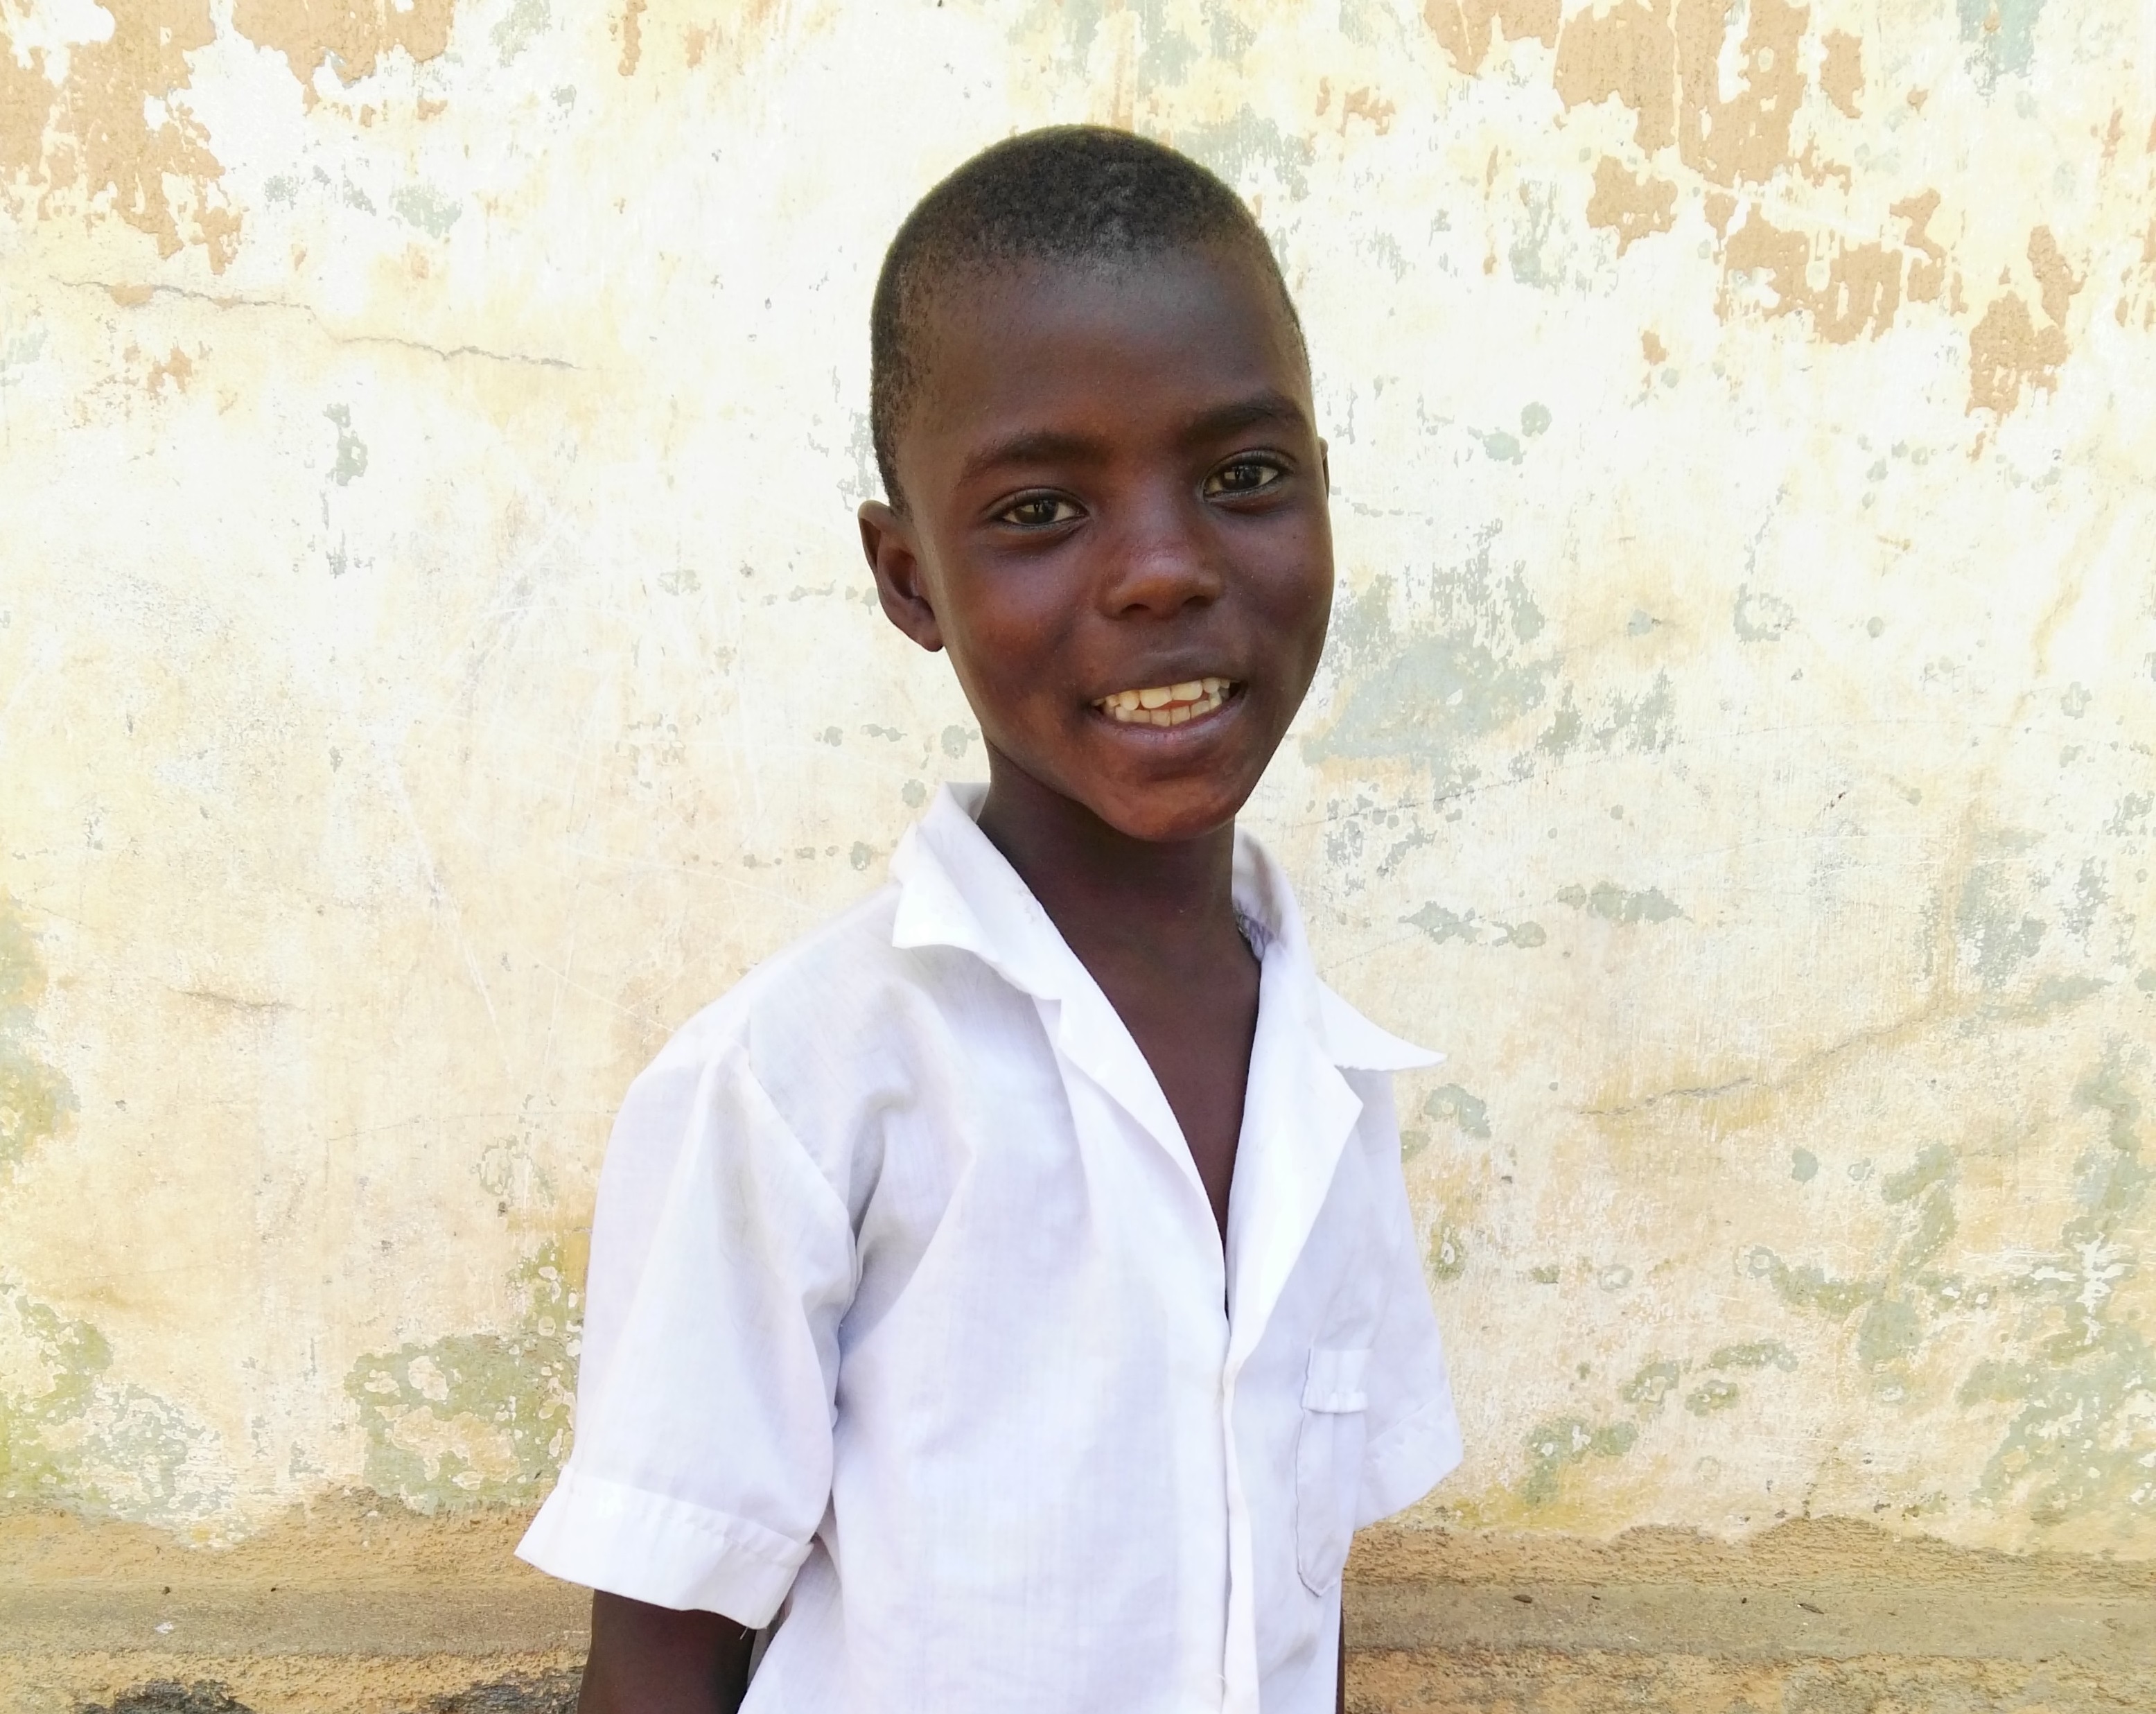 Liberian school boy smiling 